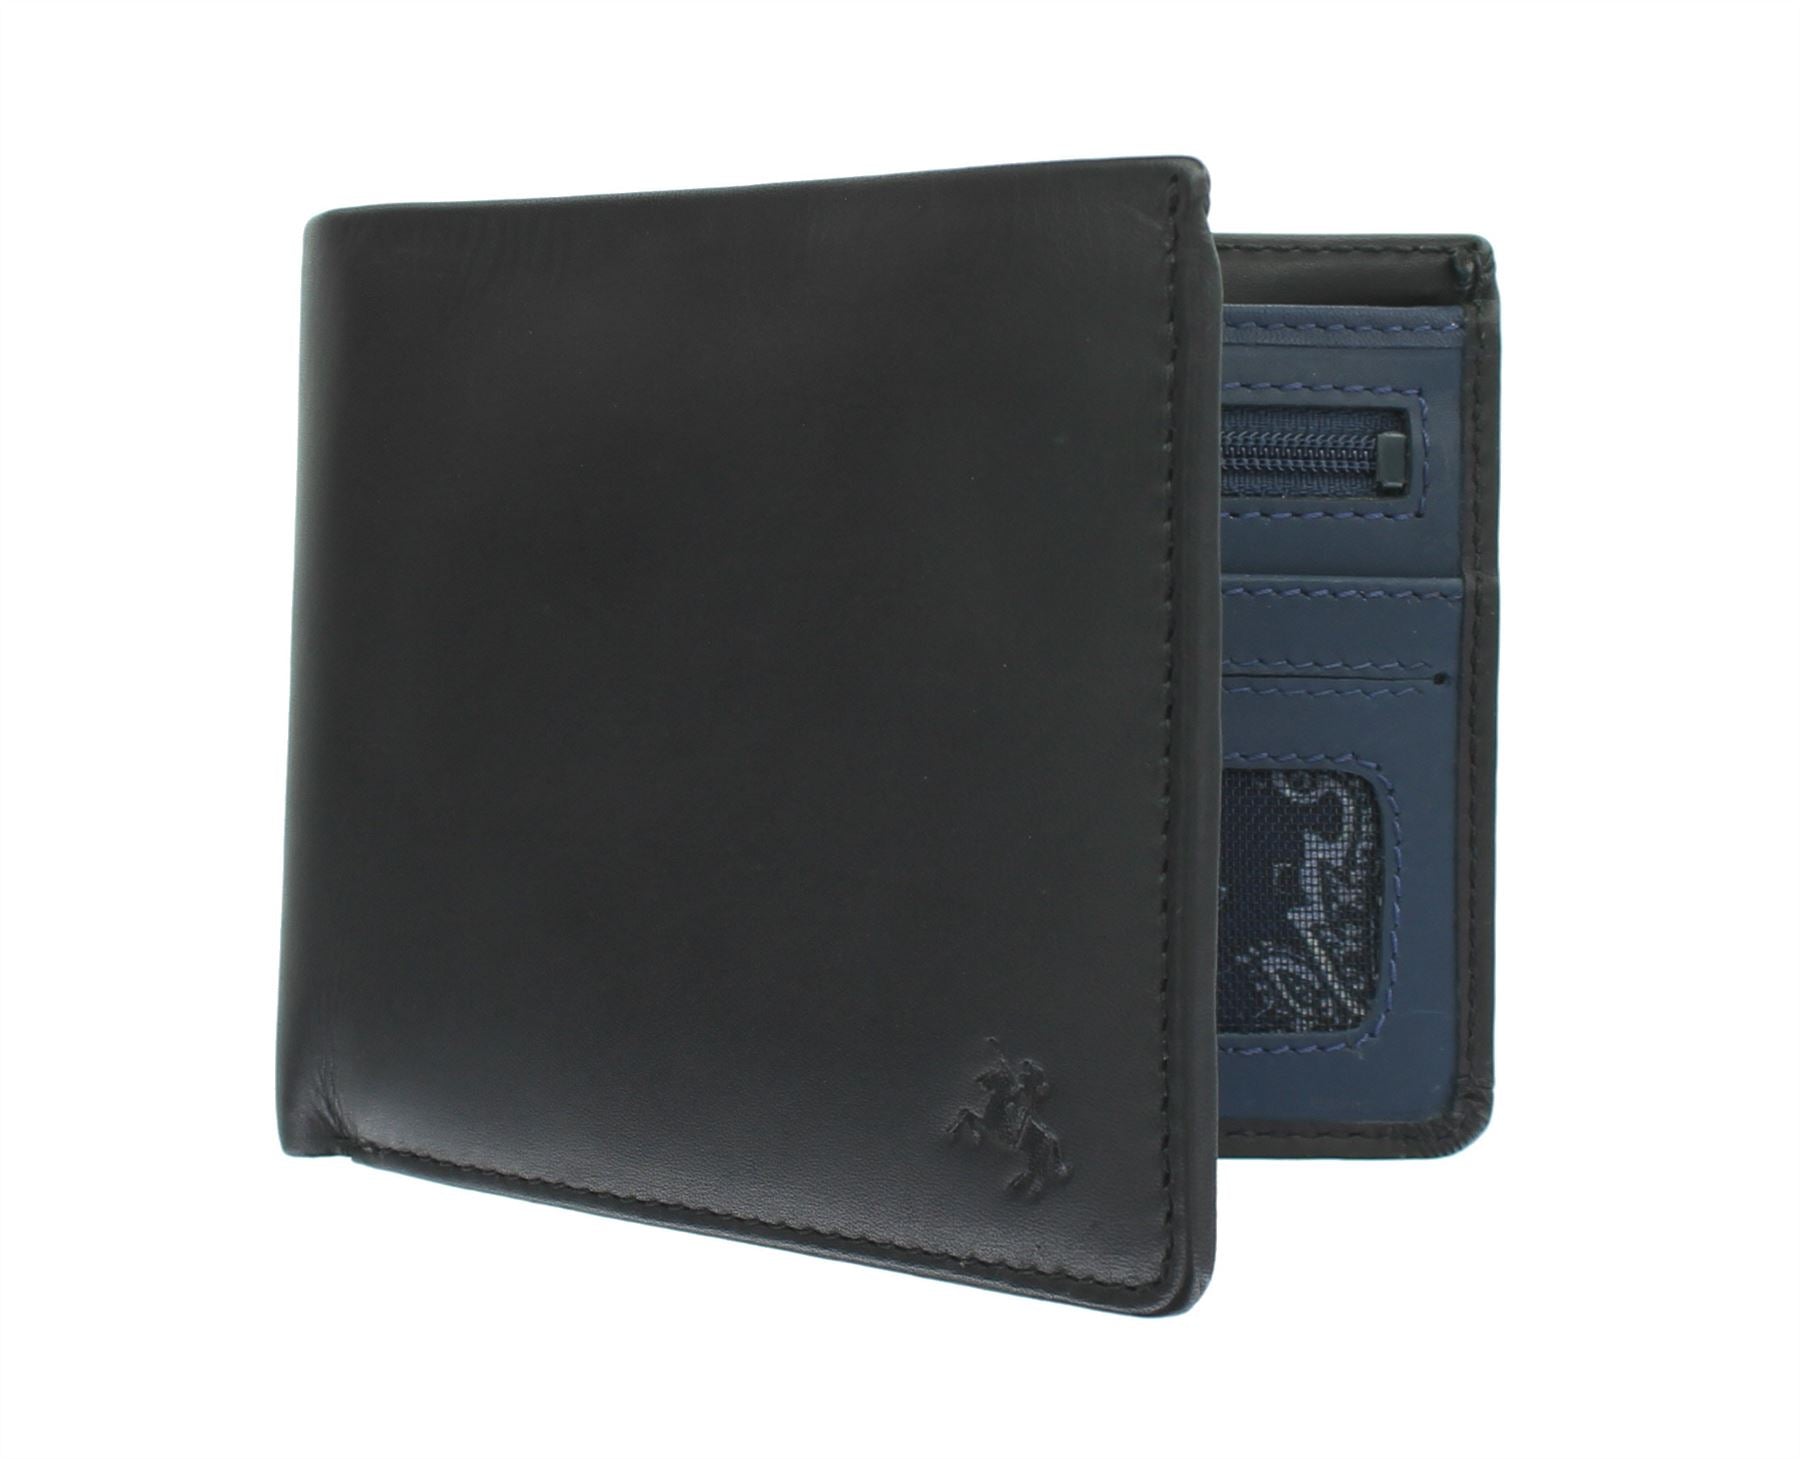 Visconti Leather Travel Organiser Wallet RFID blocking 1179 - Ashlie Craft